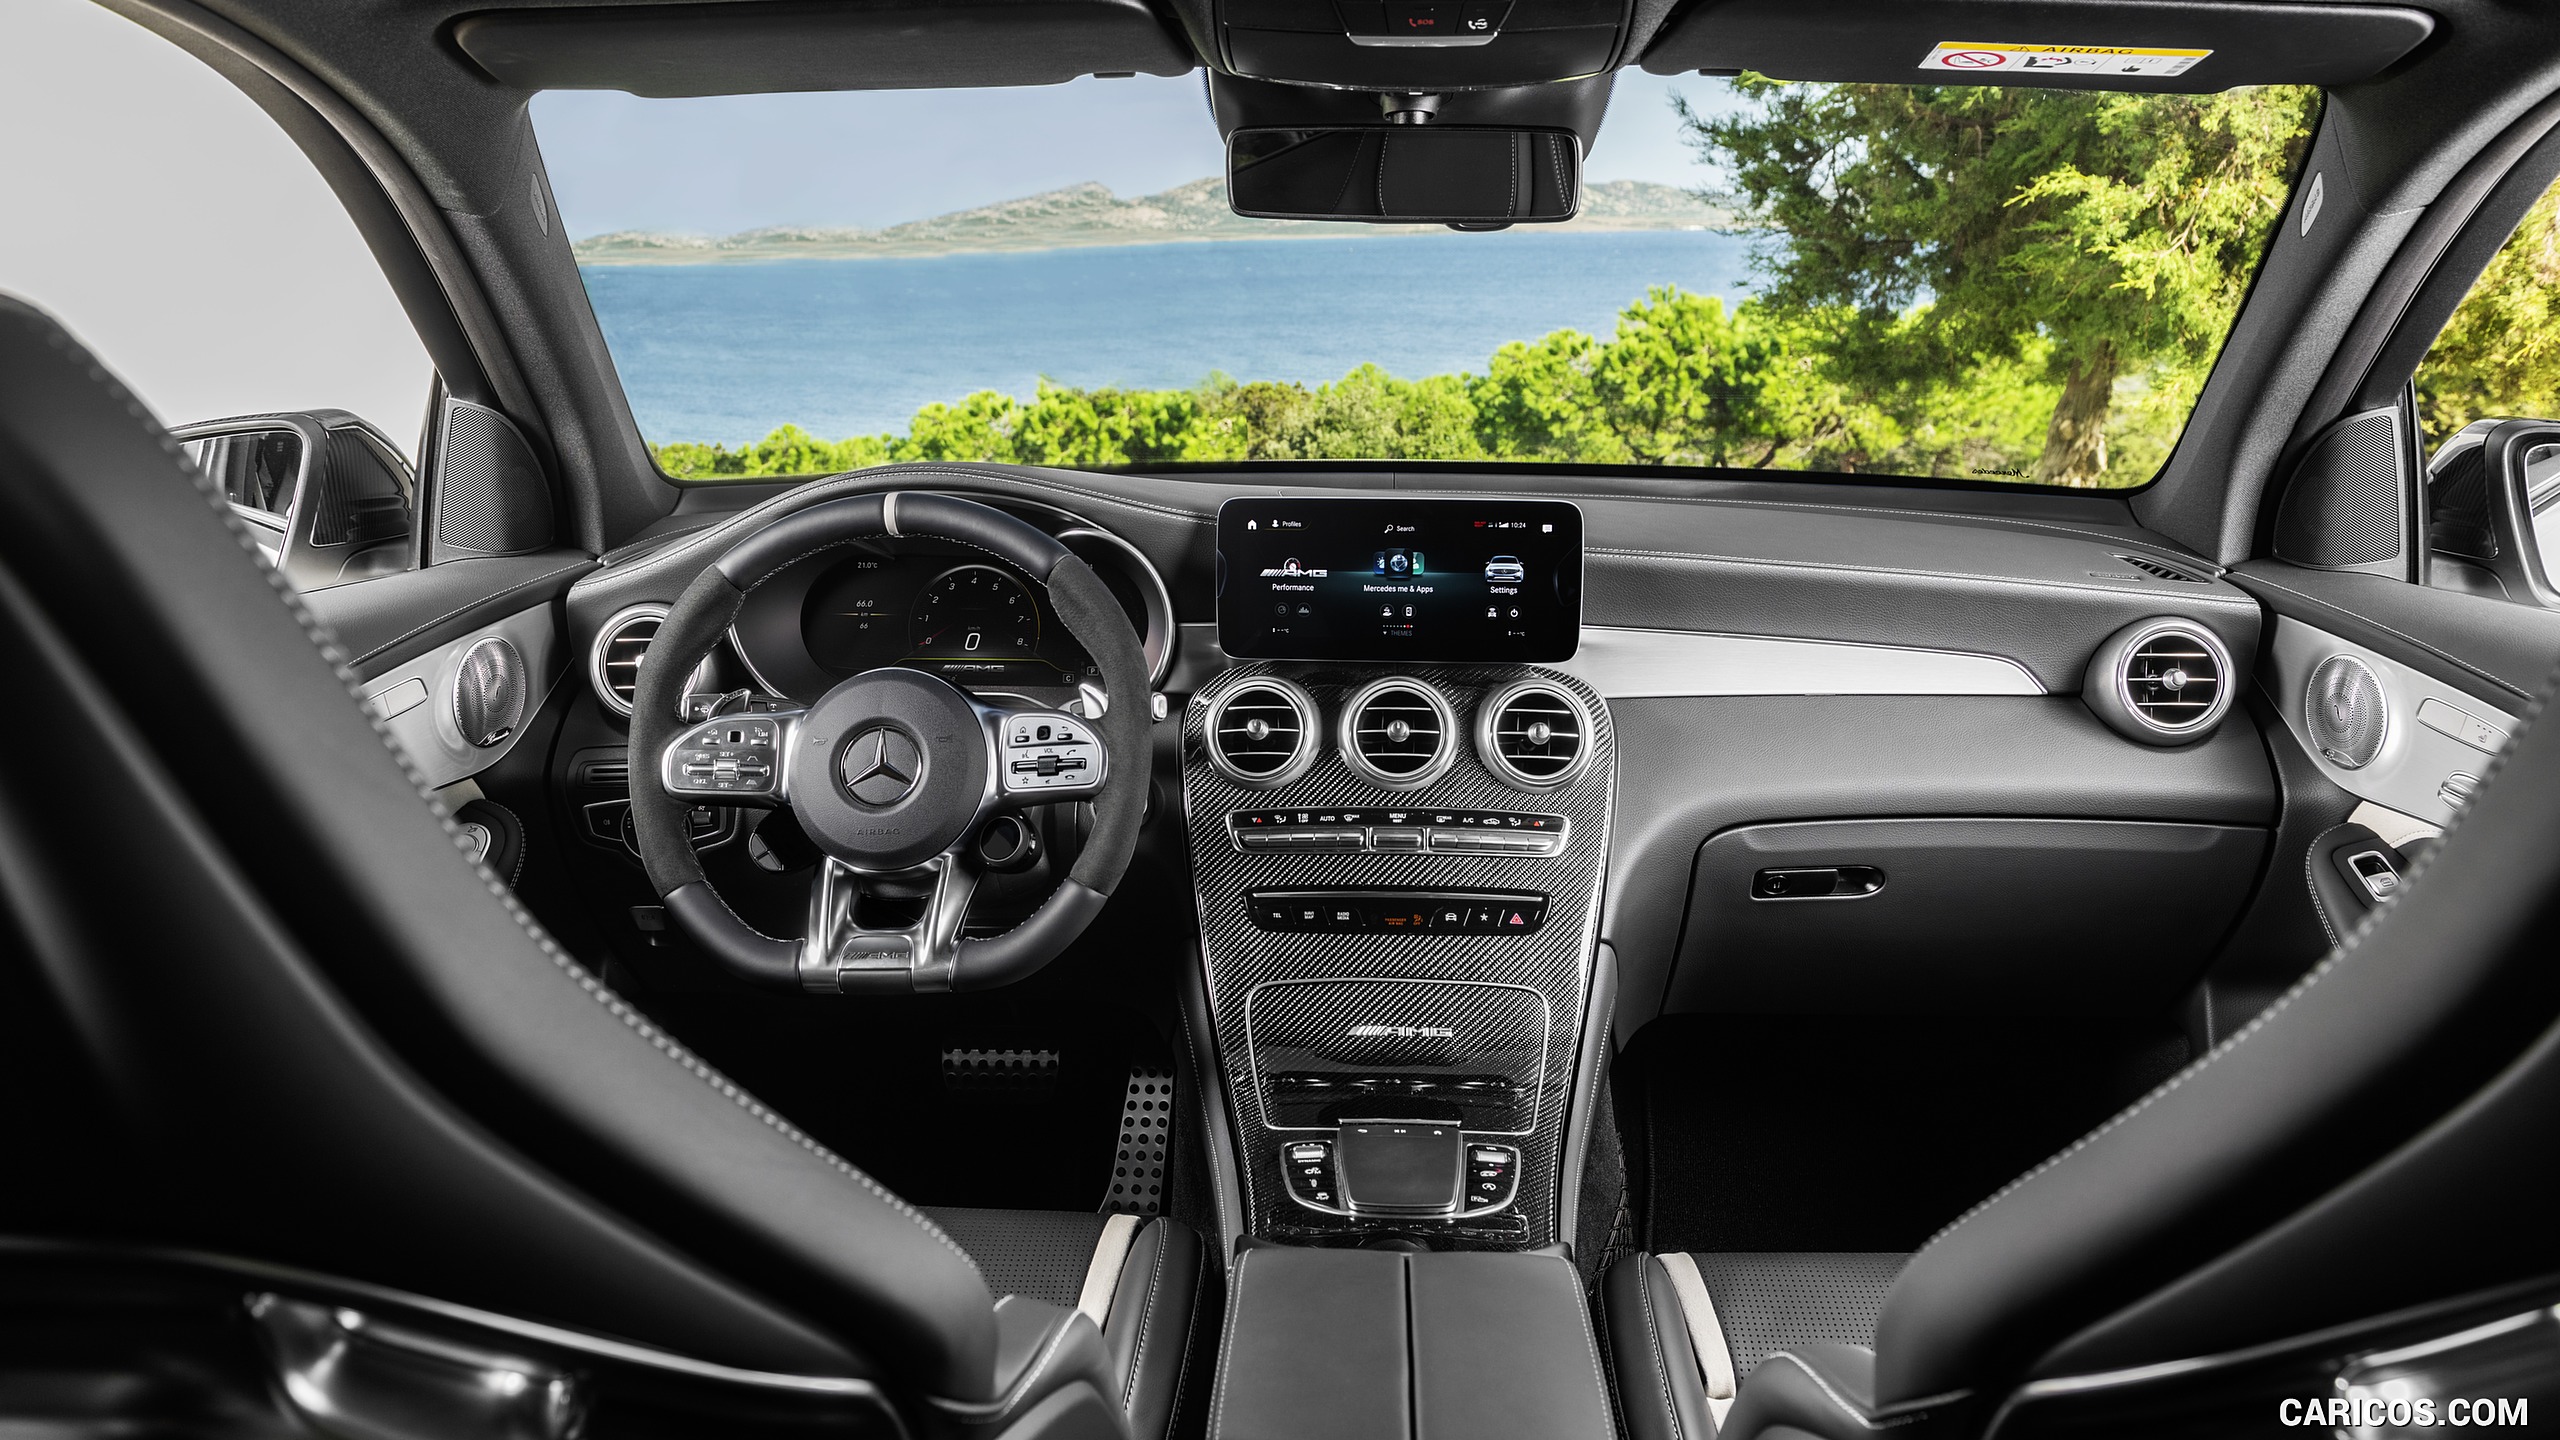 2020 Mercedes-AMG GLC 63 S 4MATIC+ - Interior, Cockpit, #33 of 118